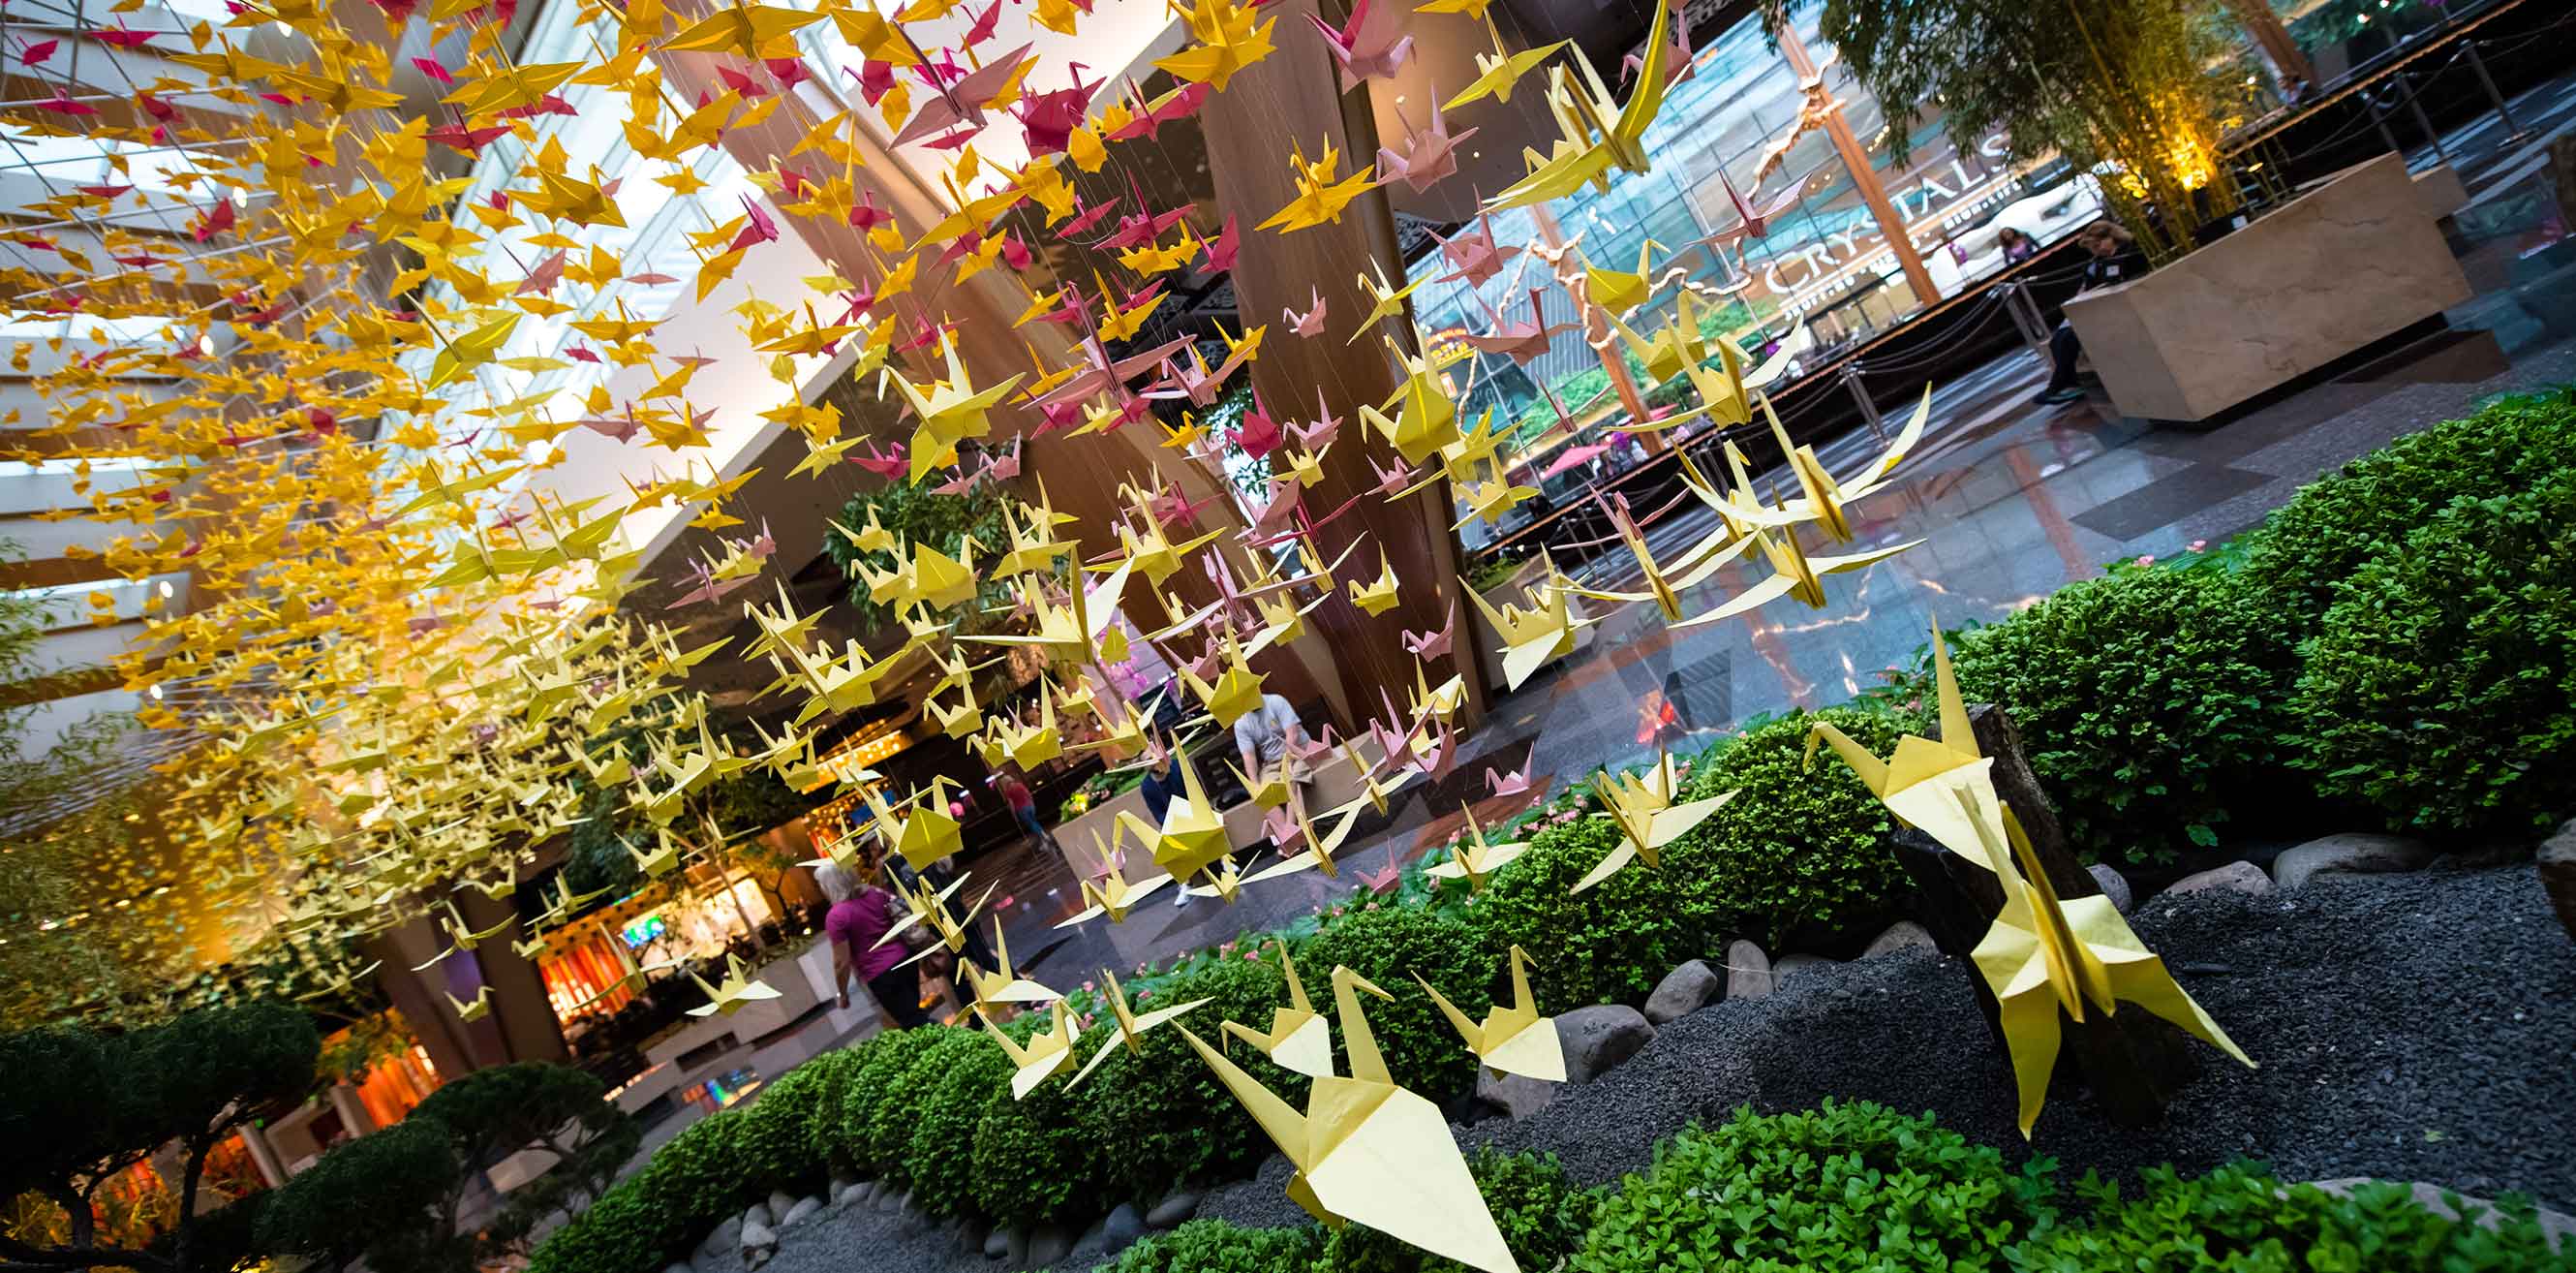 Hundreds of origami cranes arch over the Aria reception area